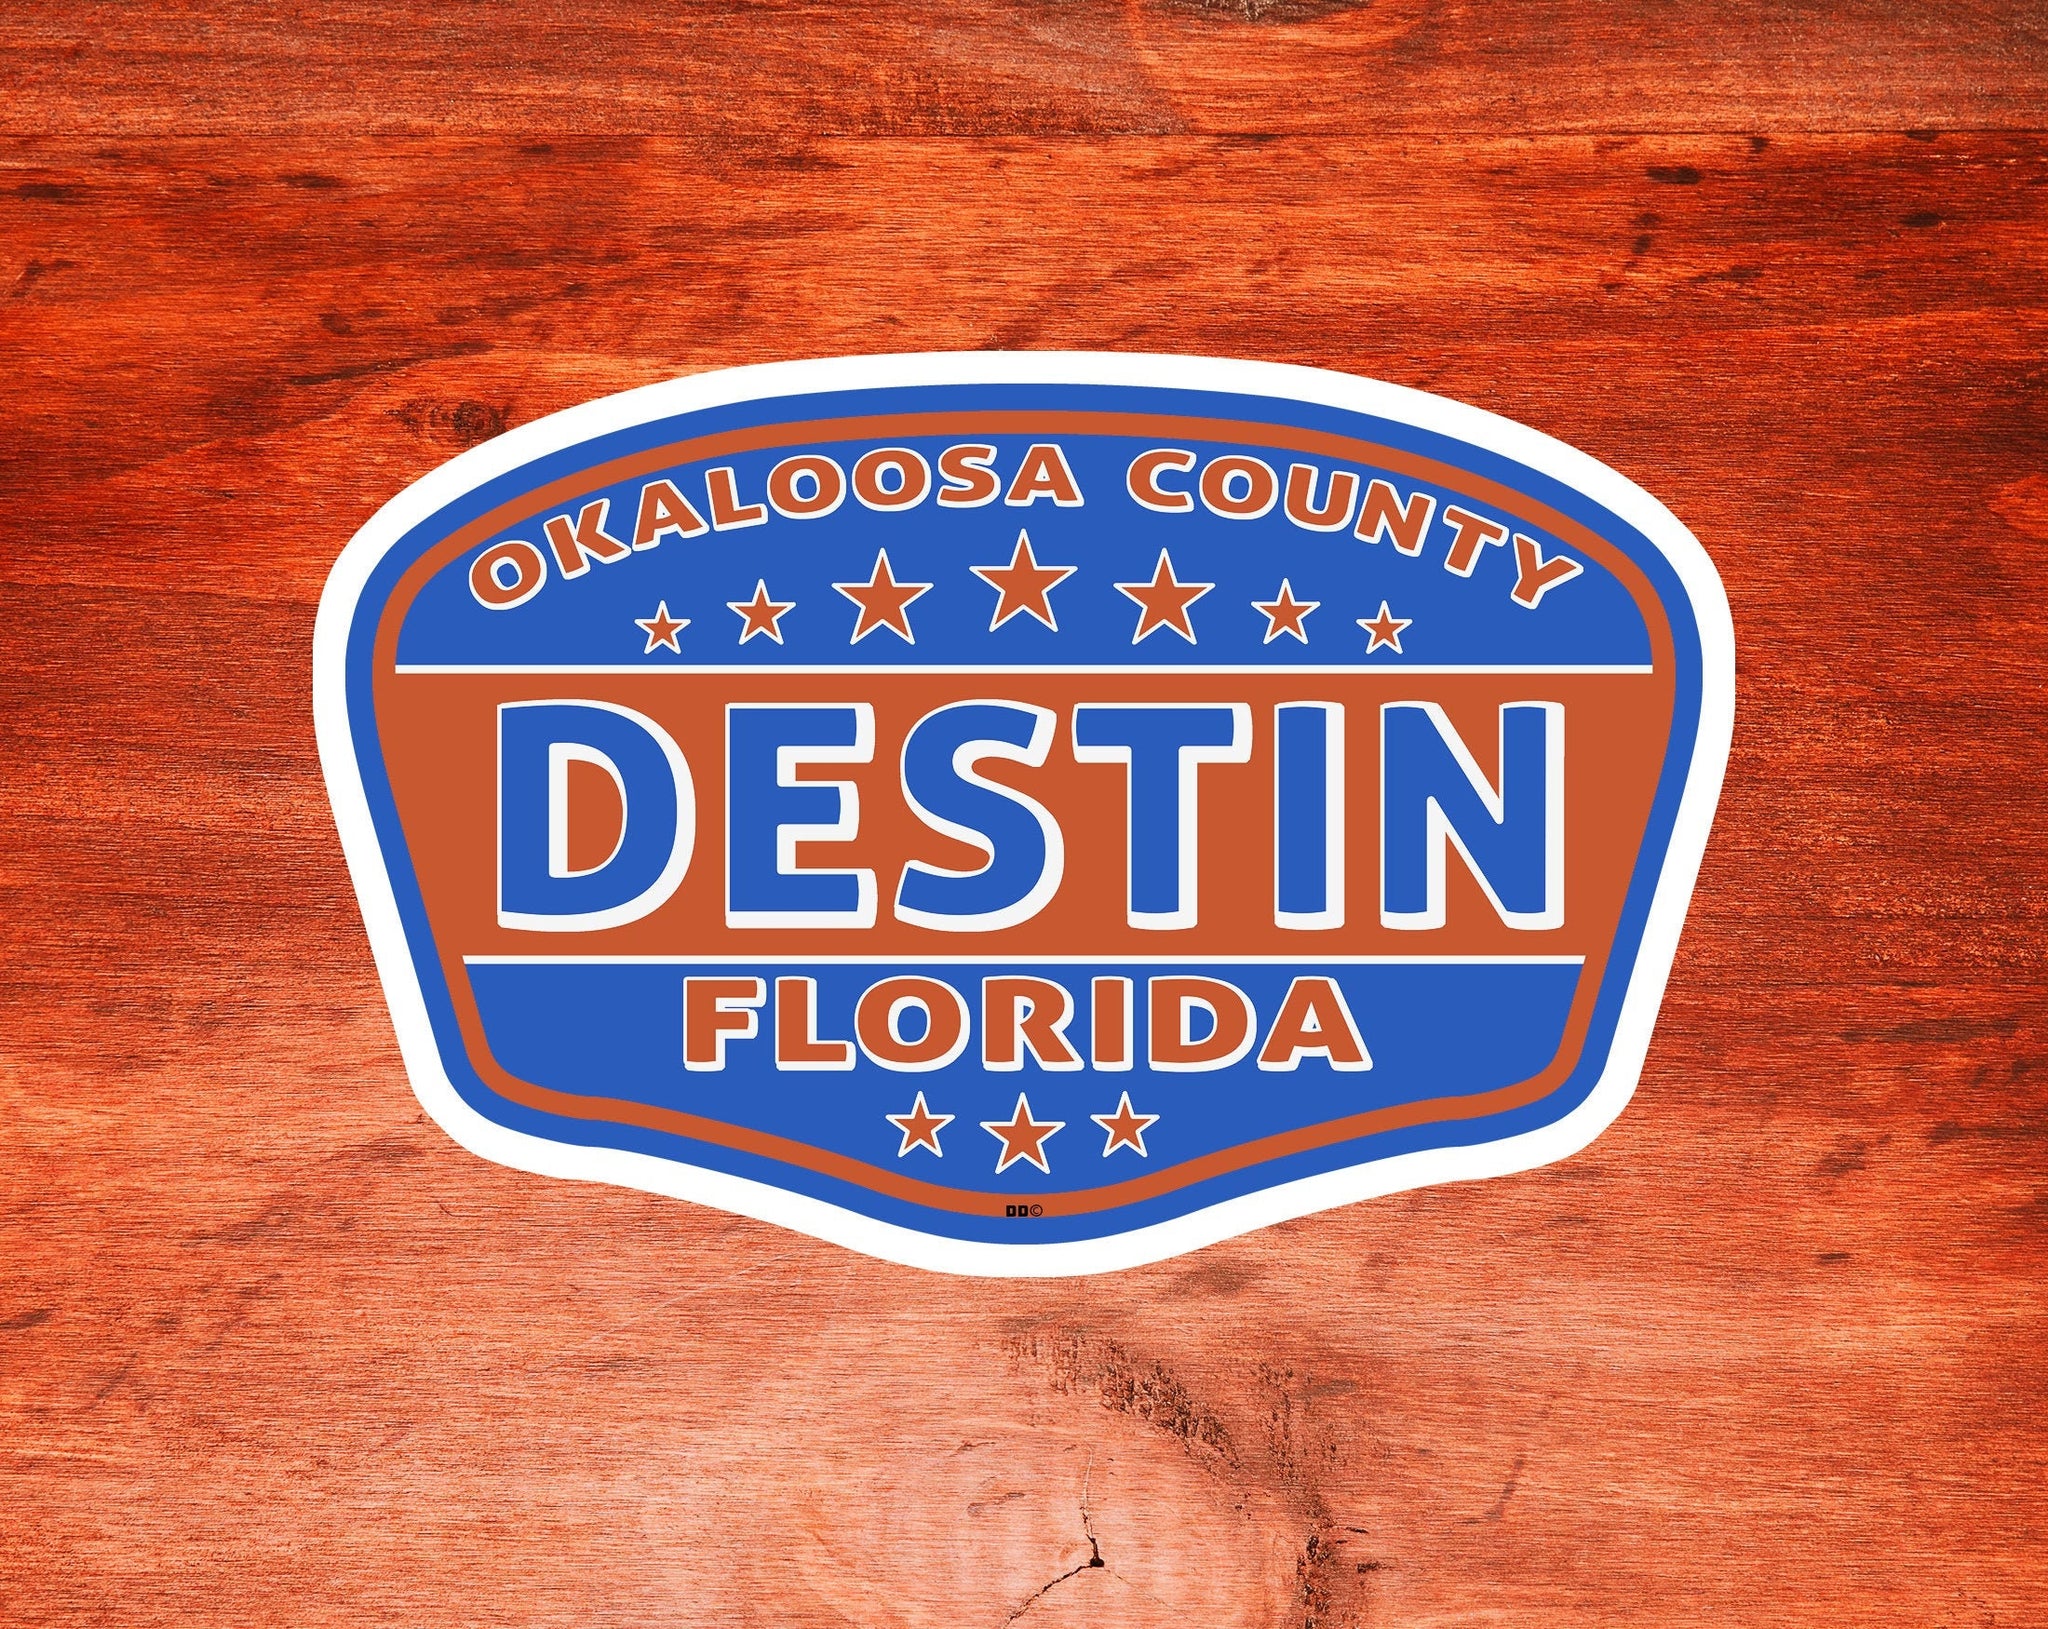 Destin Florida Decal Sticker 3.75" X 2.5" Emerald Coast Okaloosa County